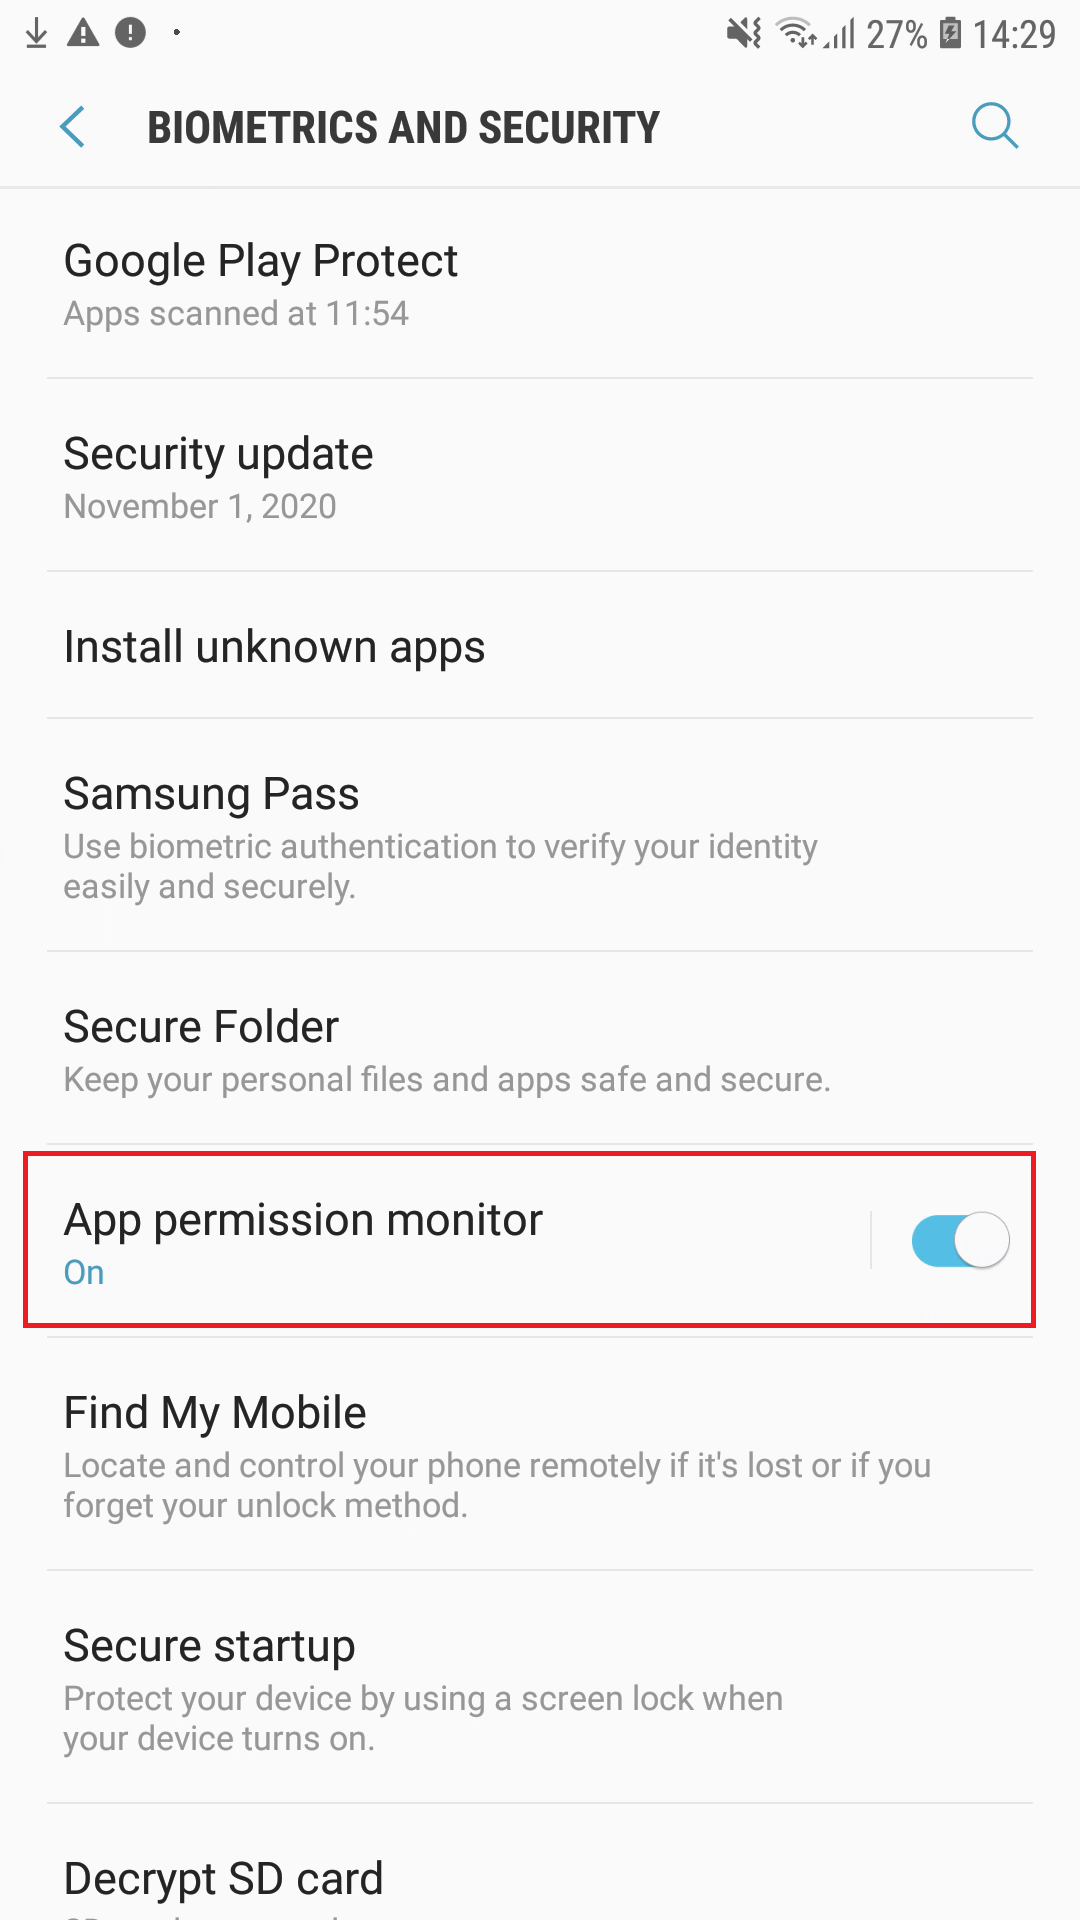 App permission monitor